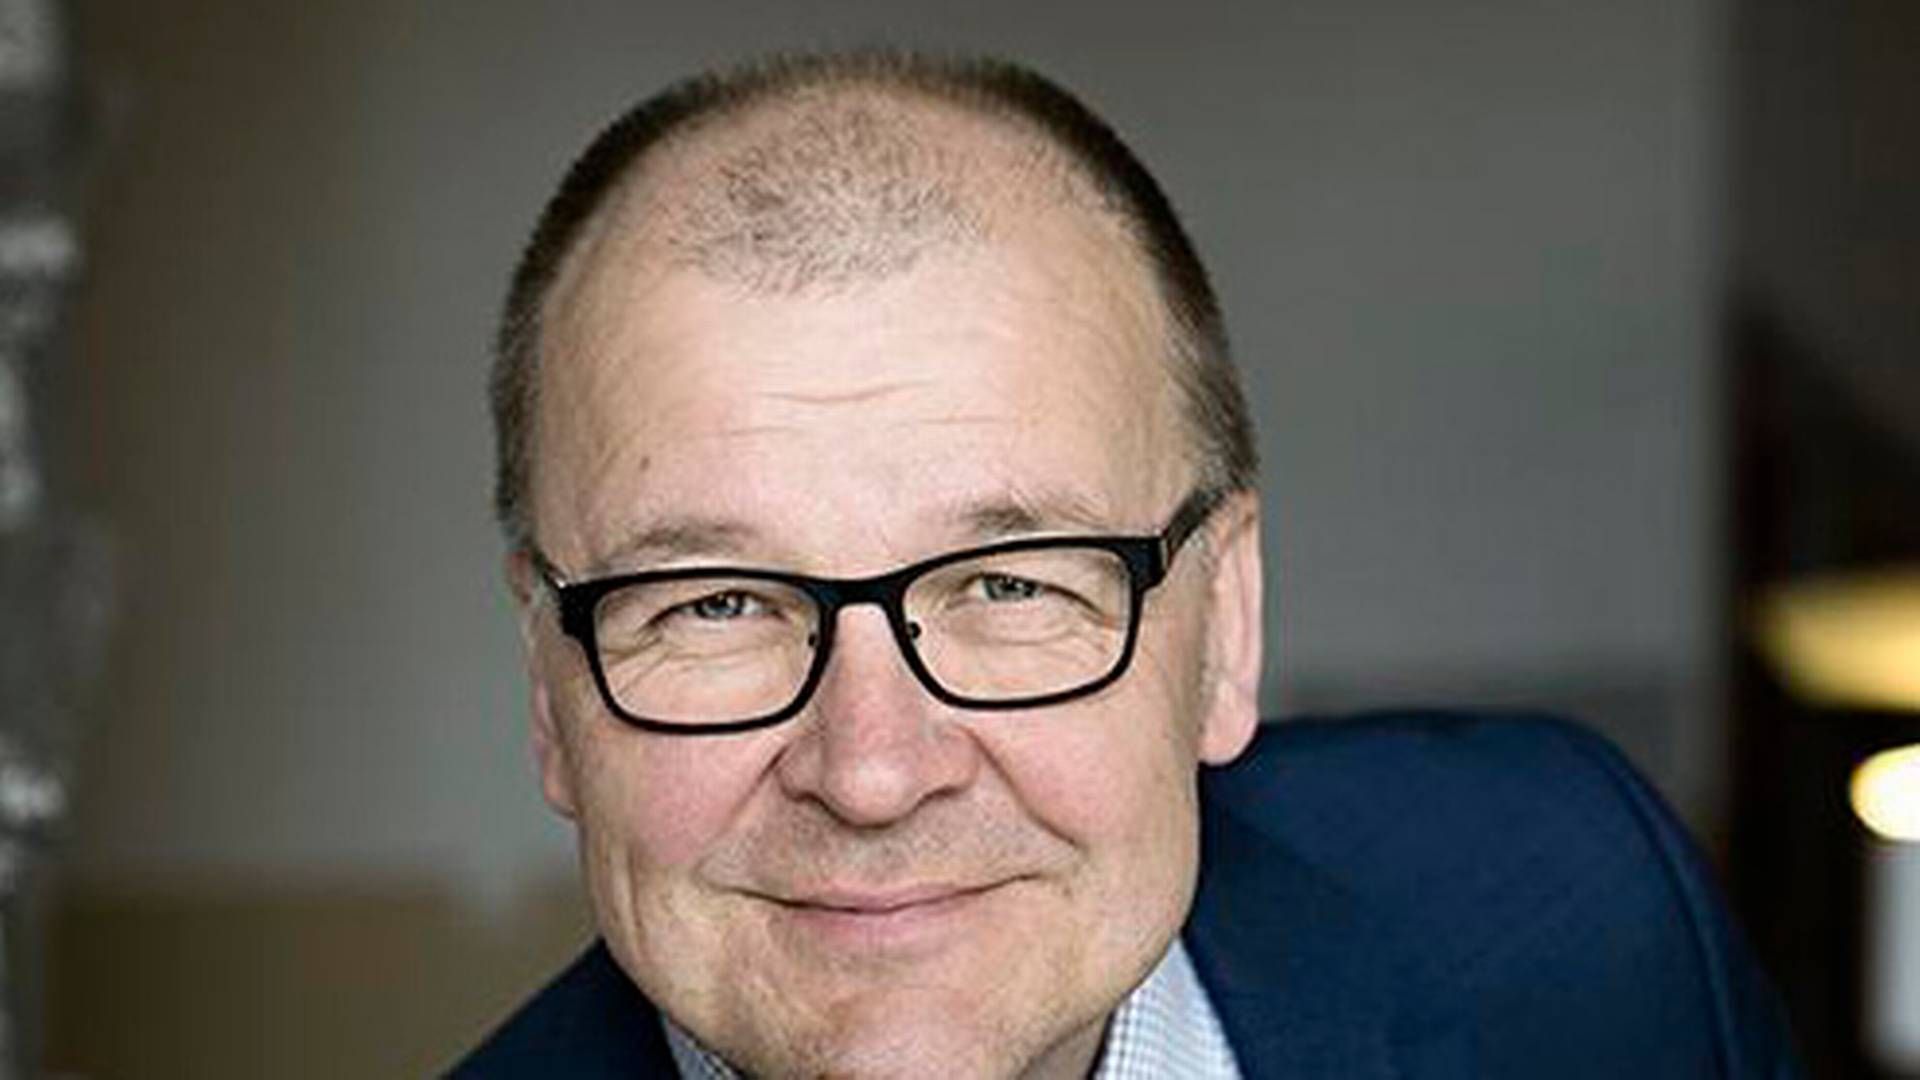 Timo Viherkenttä, CEO of Finland's State Pension Fund. | Photo: PR